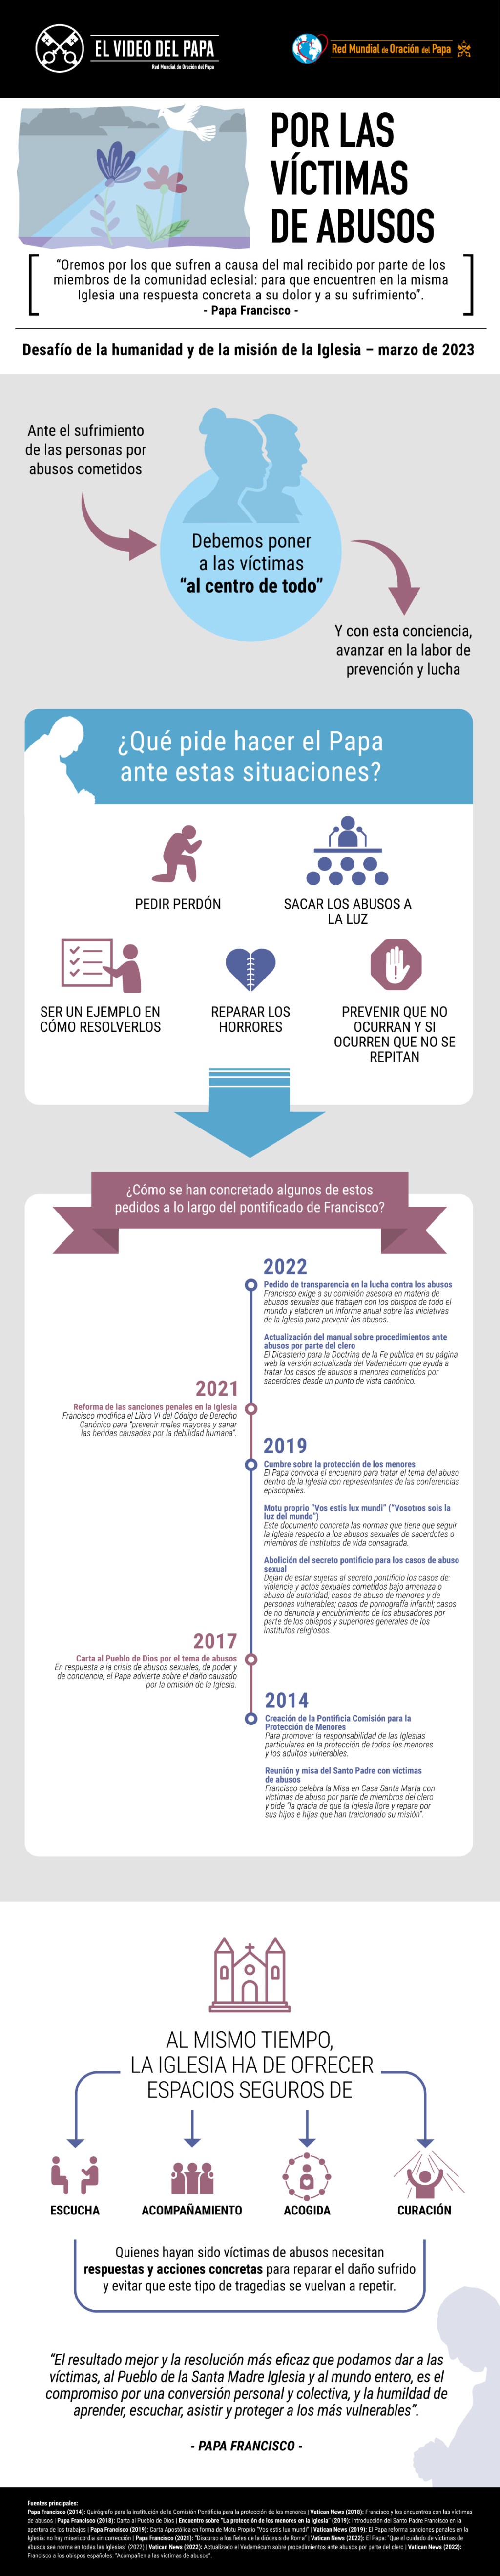 Infografia-TPV-3-2023-ES-Por-las-victimas-de-abusos.jpg